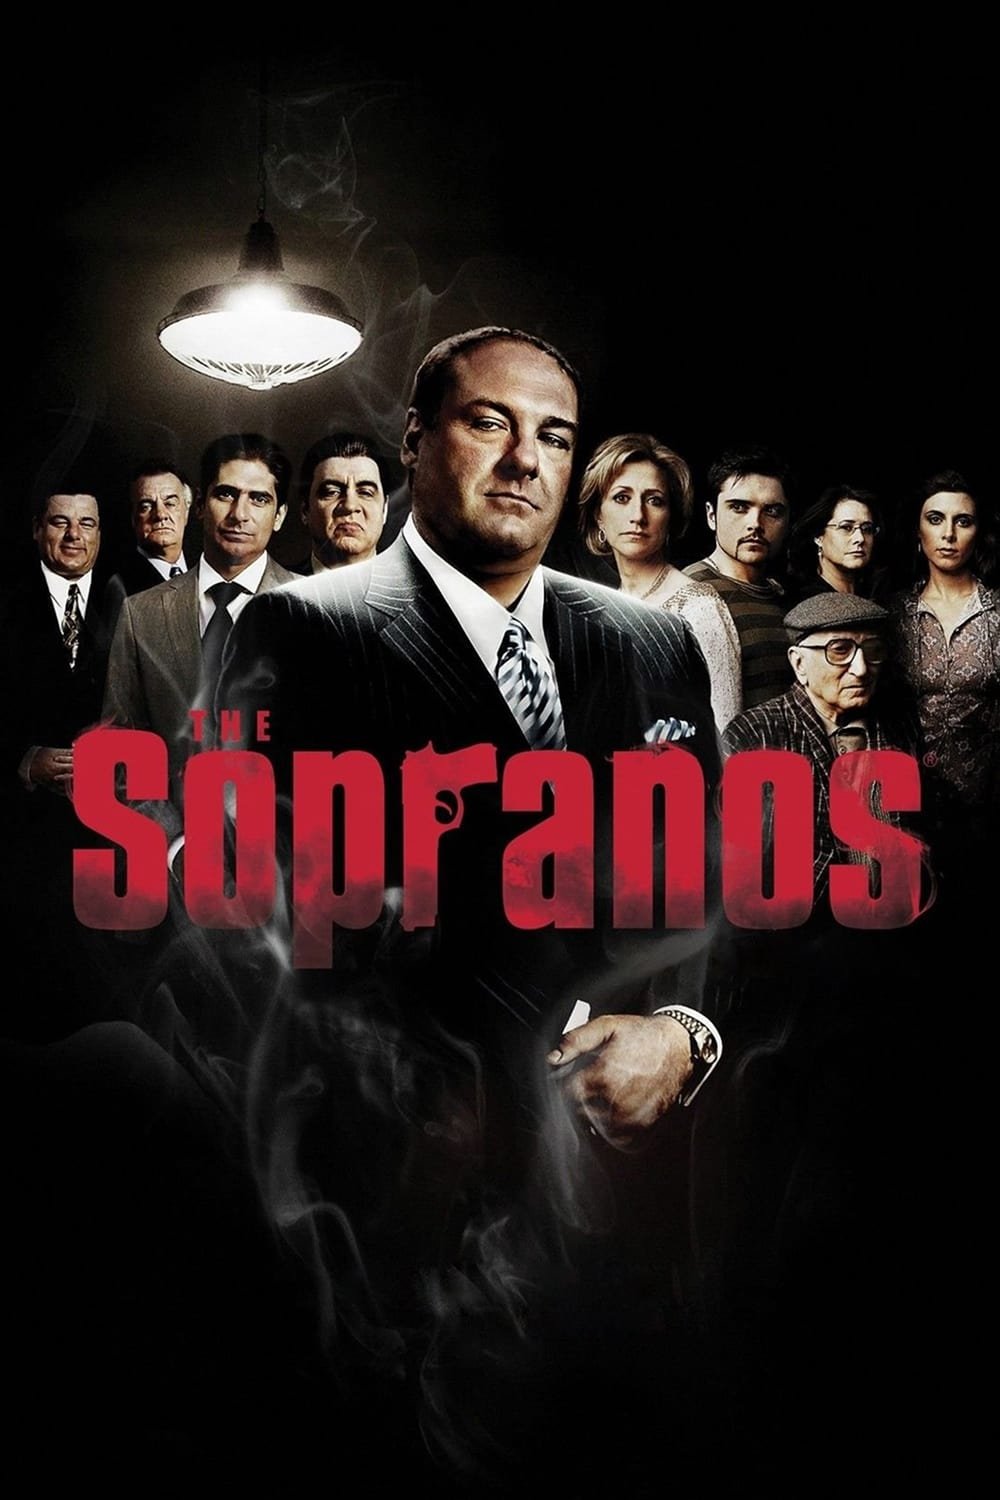 Les Soprano - Saison 6